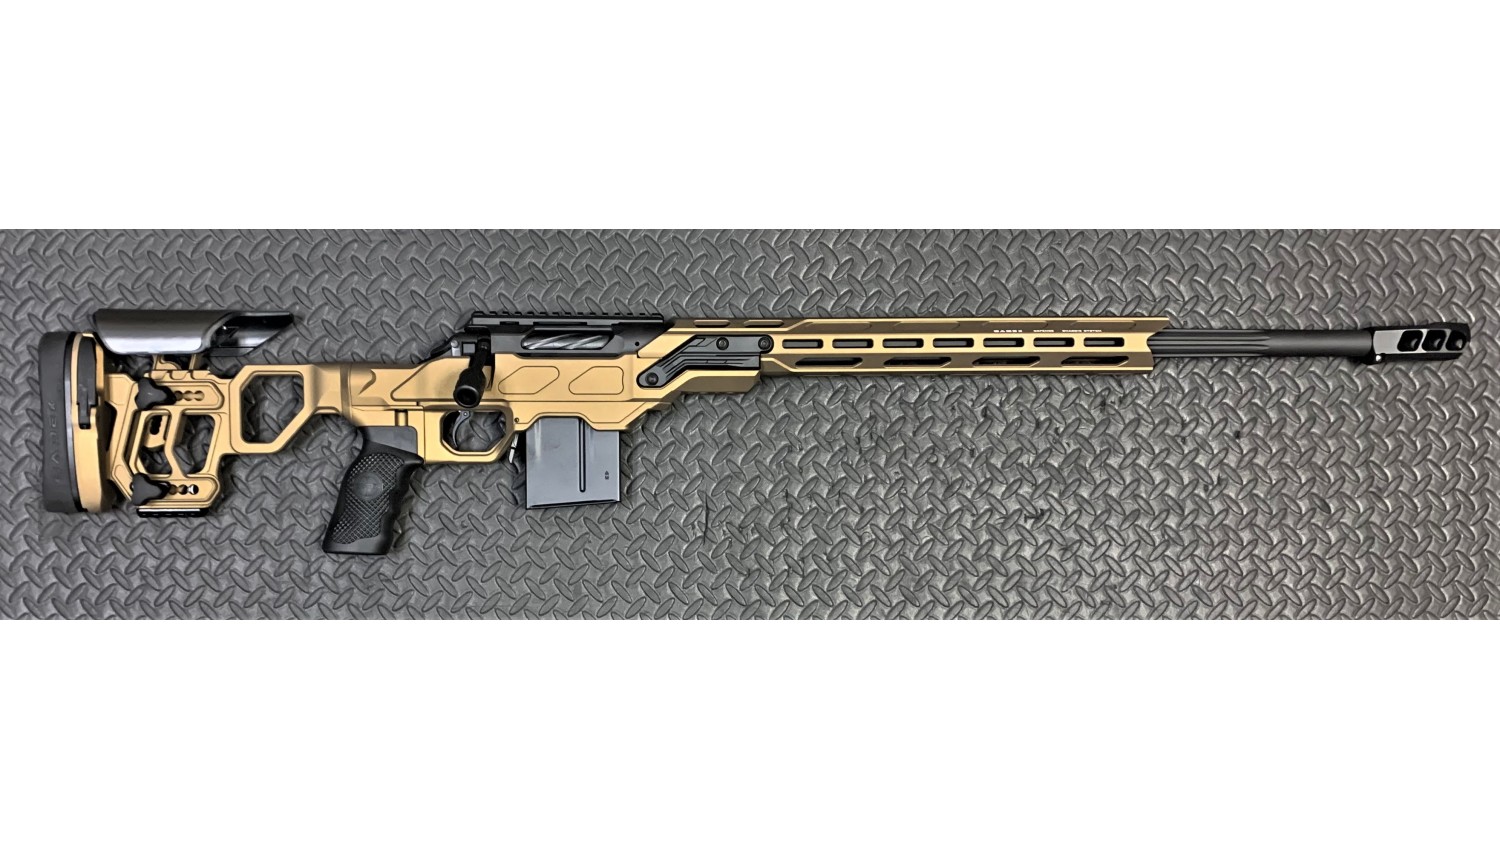 Cadex Defense CDX-R7 FCP (Field Comp) SA .308 Win 24 1:11.25 Bbl Skeleton  Stock Hybrid Grey/Black Rifle w/MX1 Muzzle Brake  CDXR7-FCP-308-24-BS20-D2F1N-HGB For Sale!